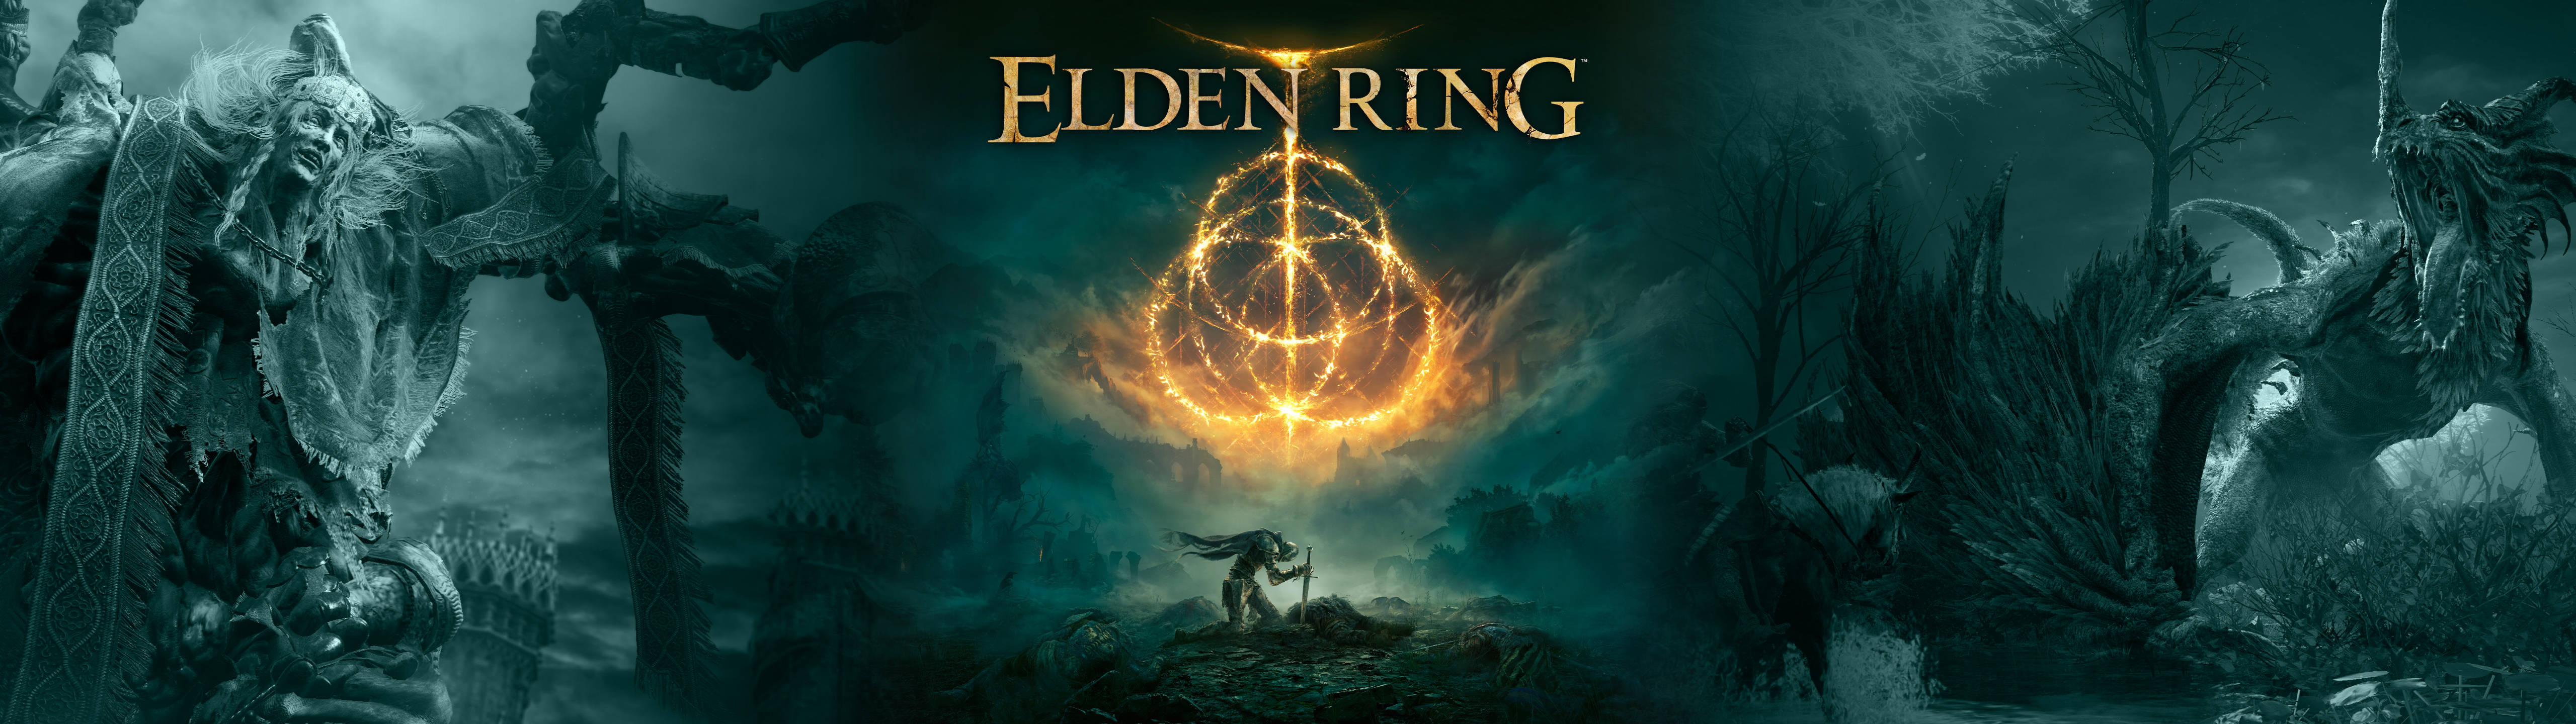 Elden Ring 5120x1440 Gaming Background